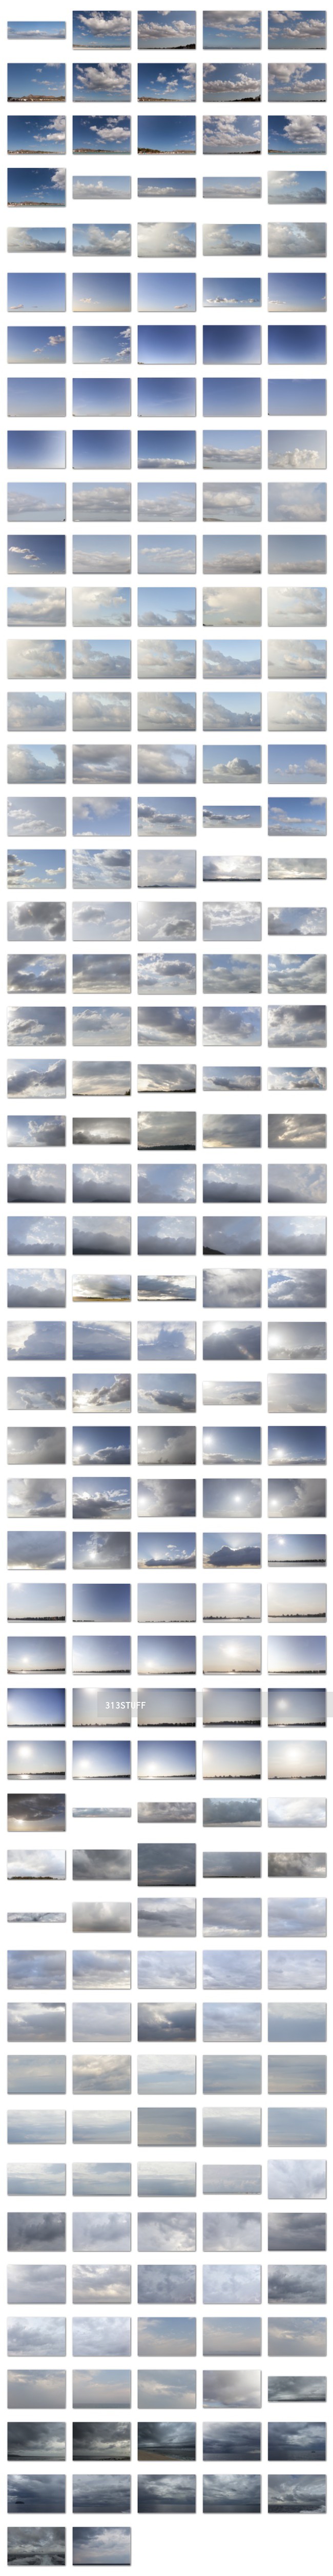 500+ photos of afternoon skies